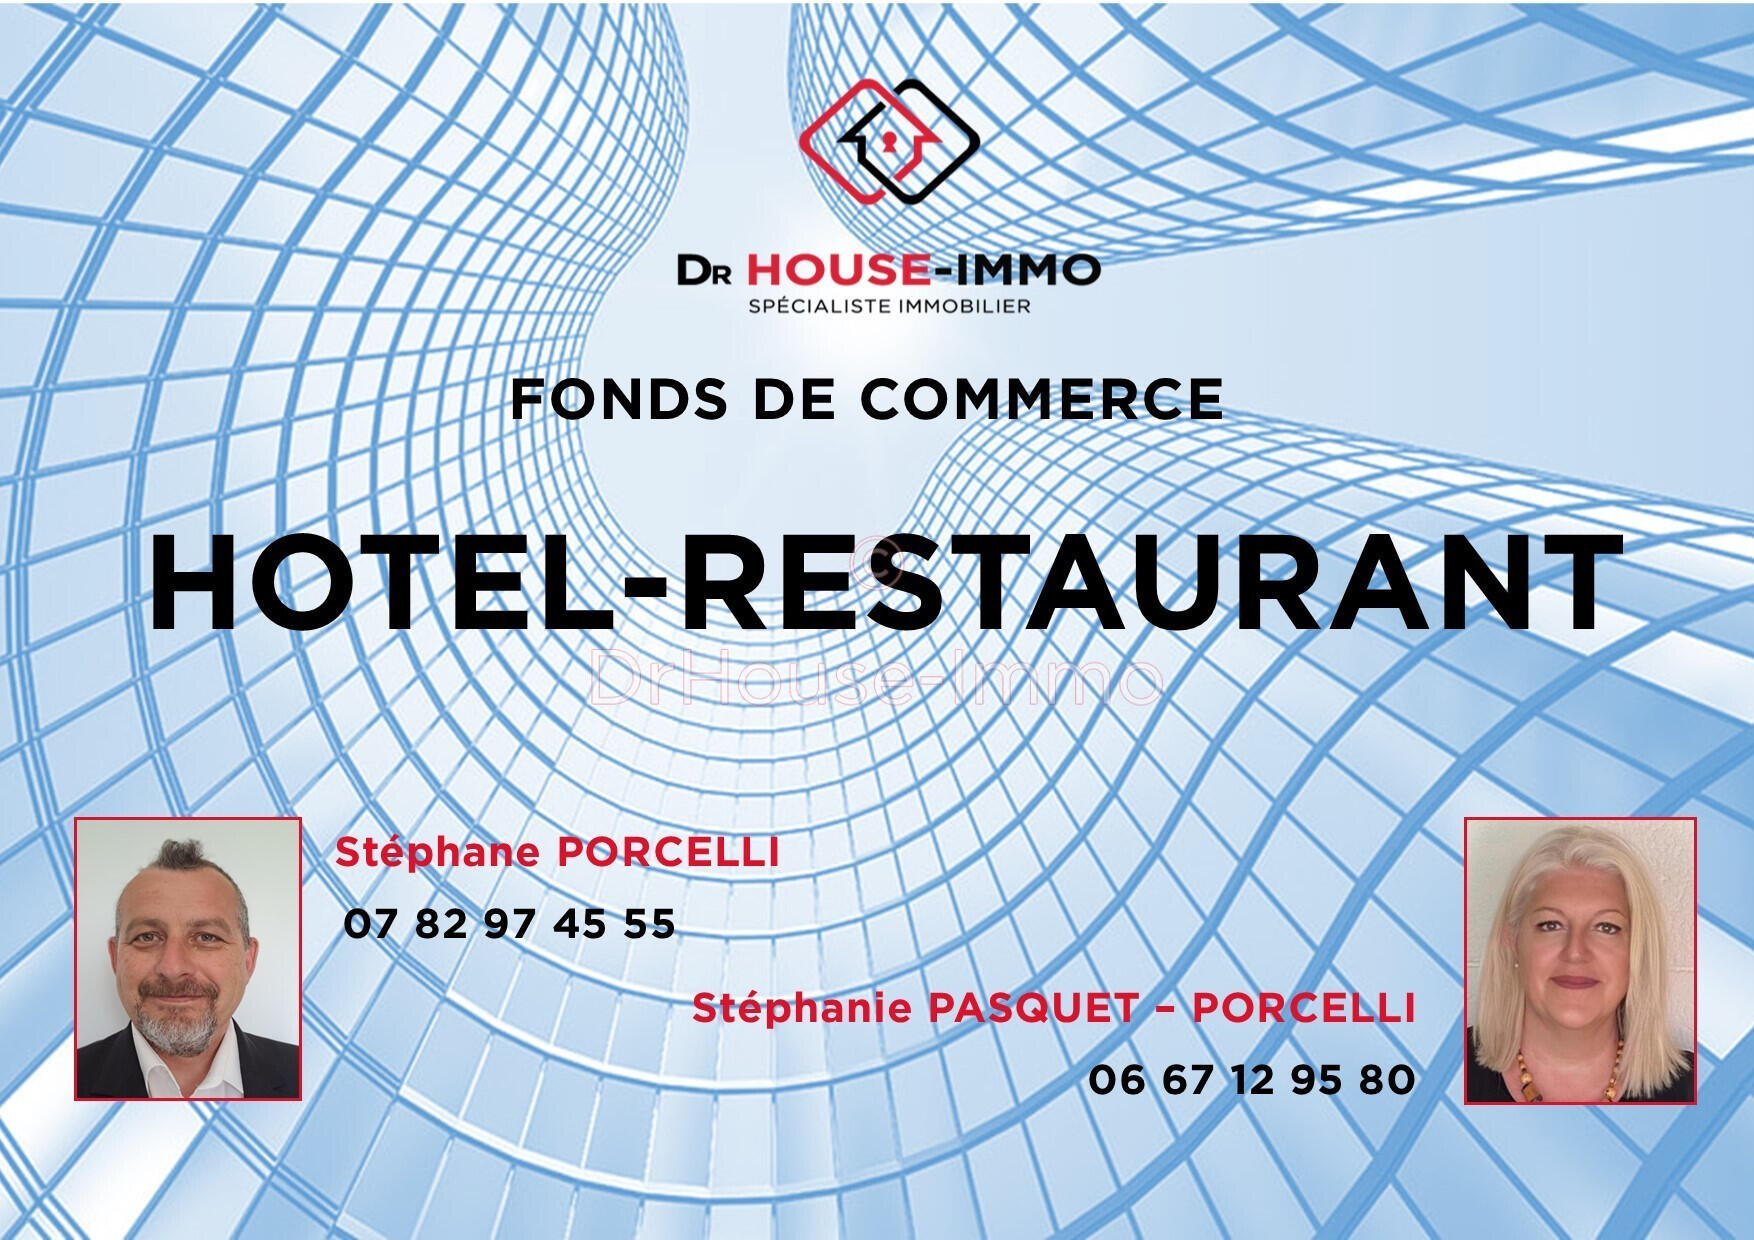 Vente hôtel restaurant à Vendays-Montalivet